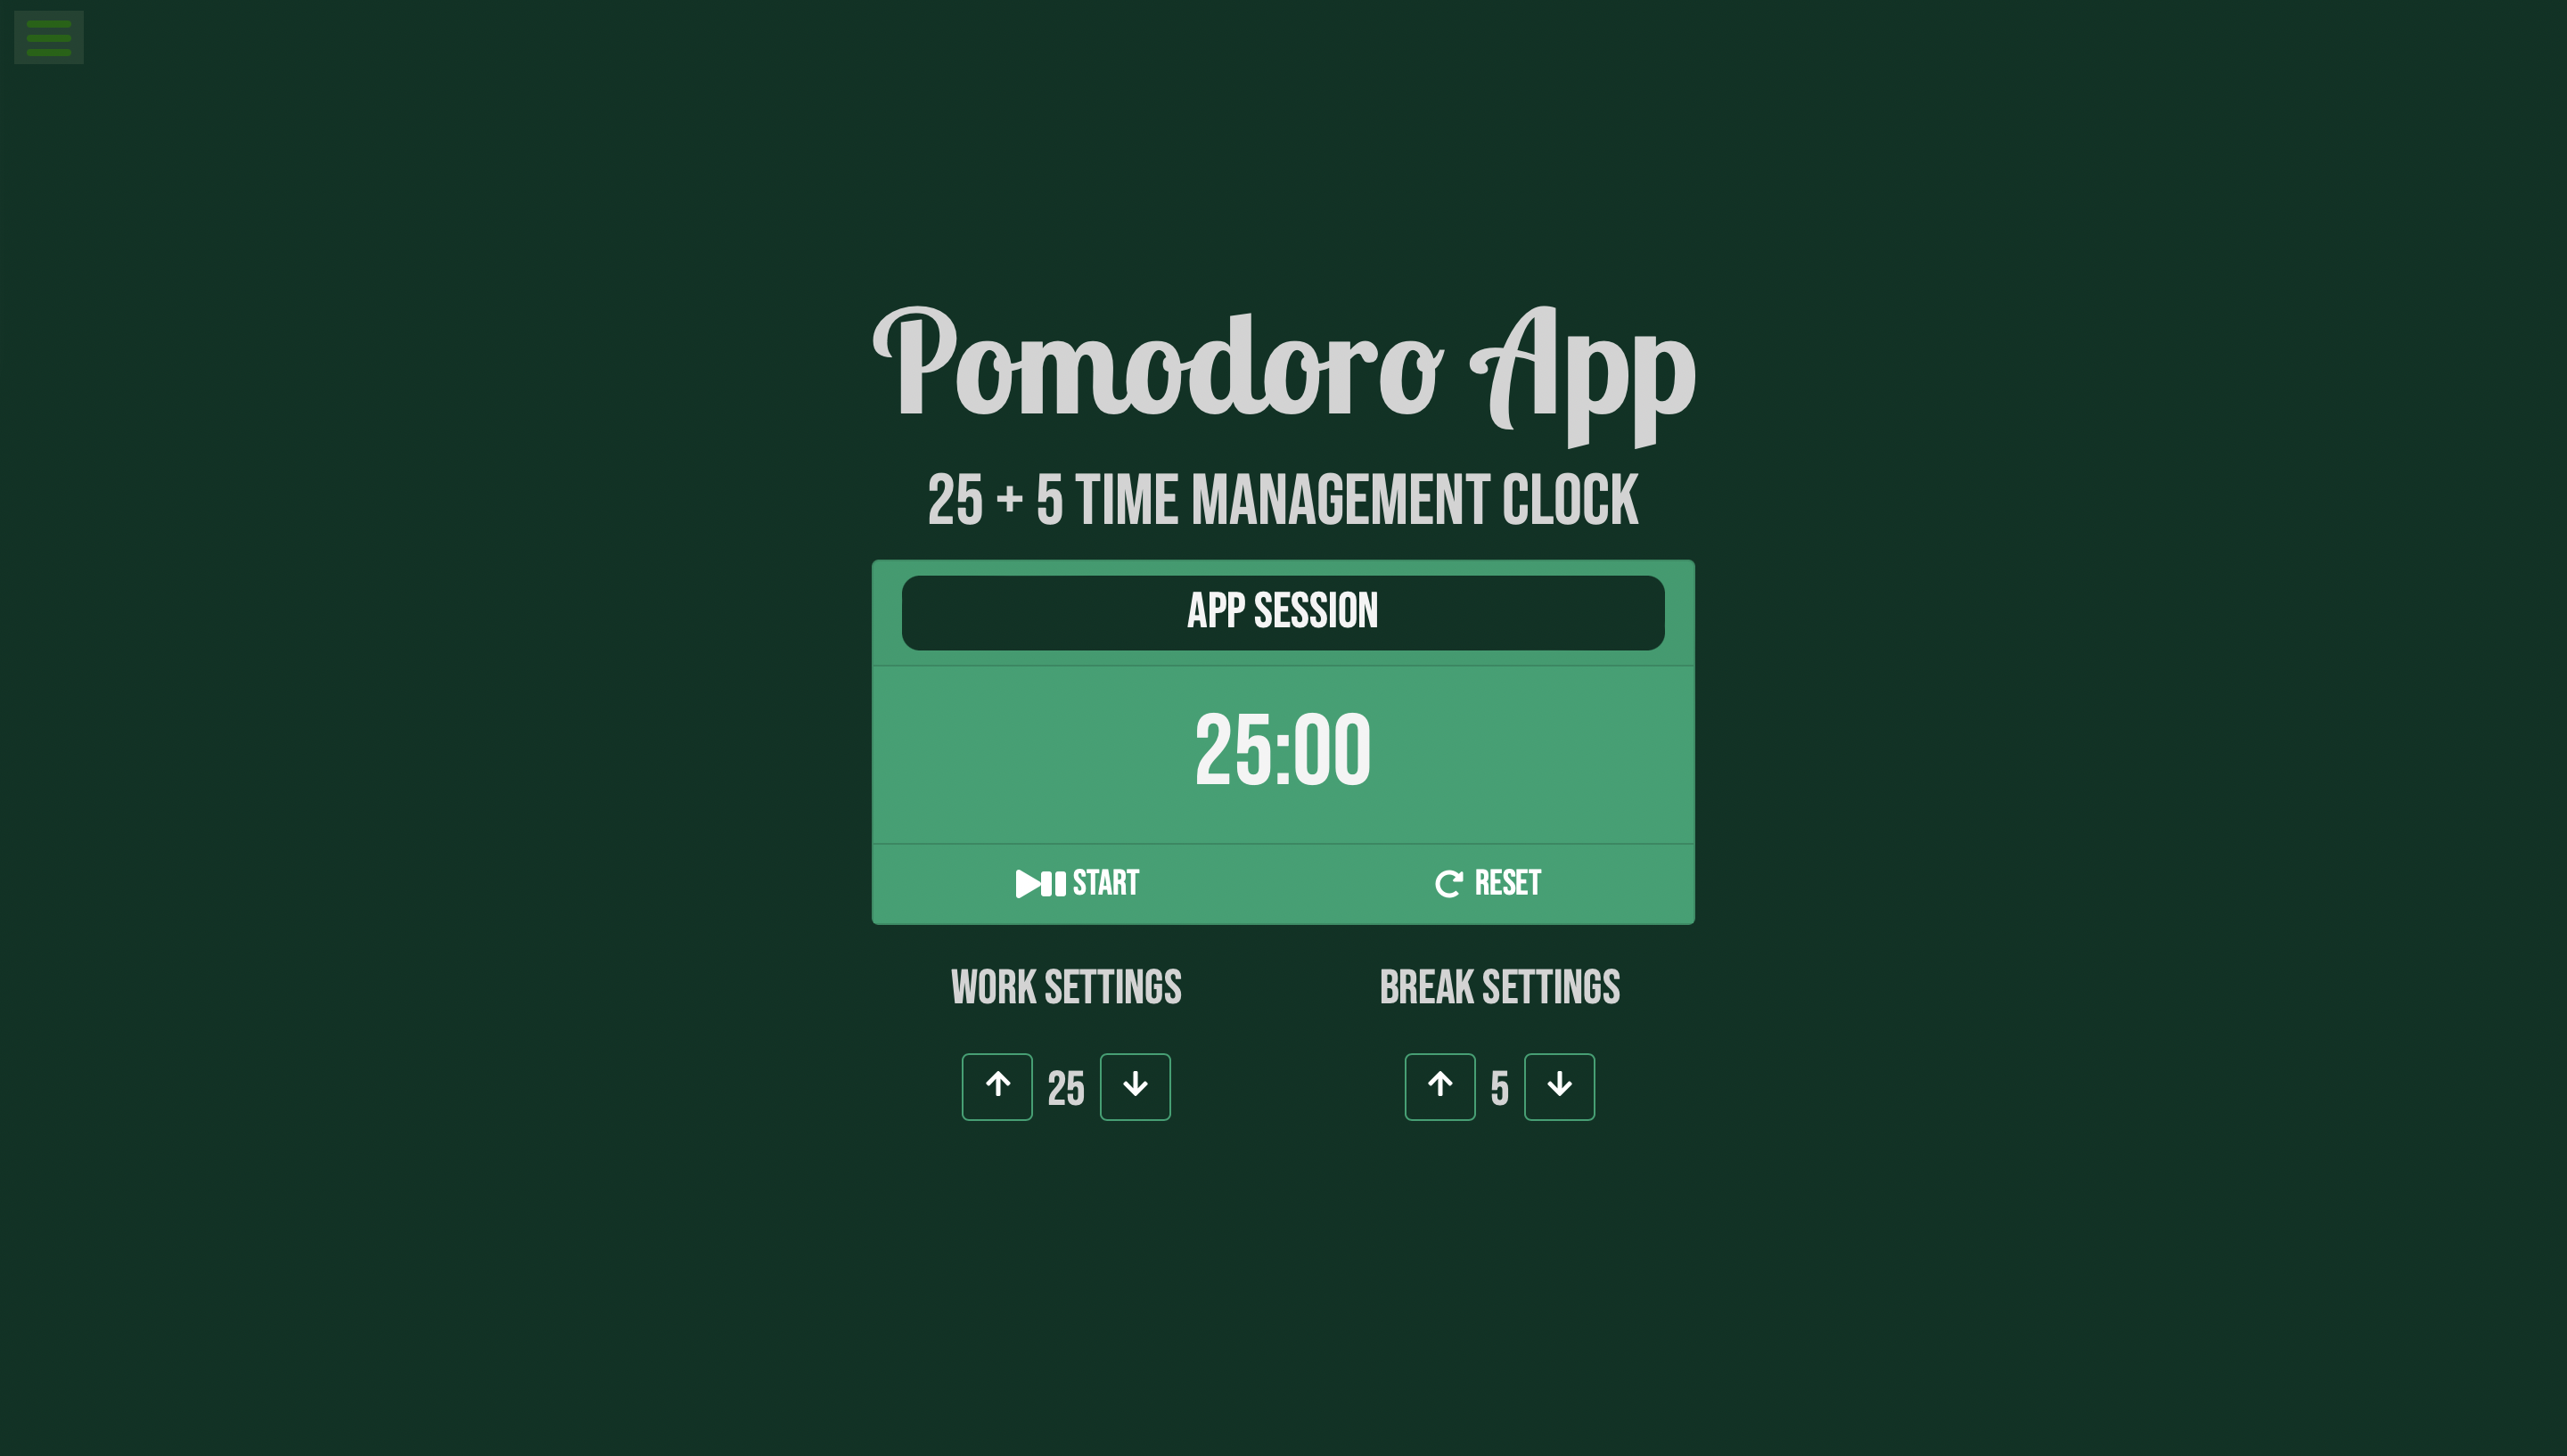 Pomodoro App Image